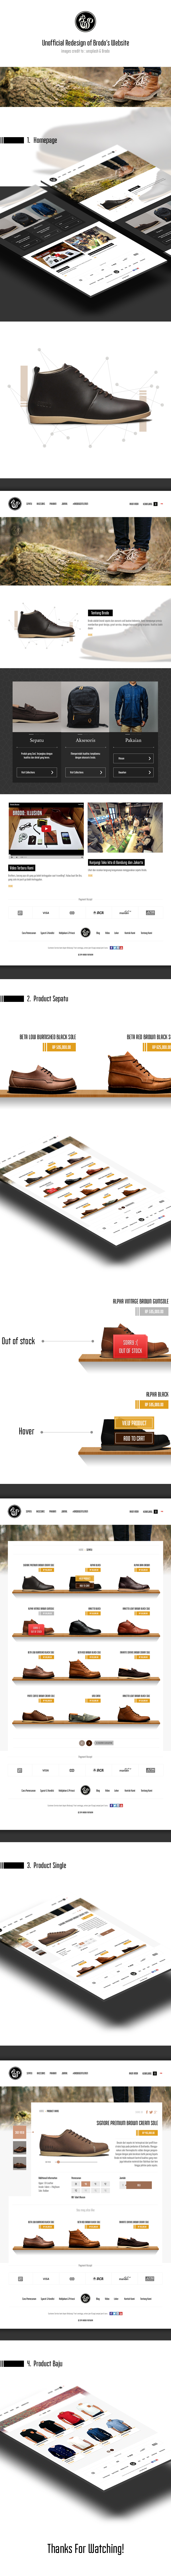 shoes redesign Web design elegant modern fashio accesories clean Sharp UserExperience UserInterface